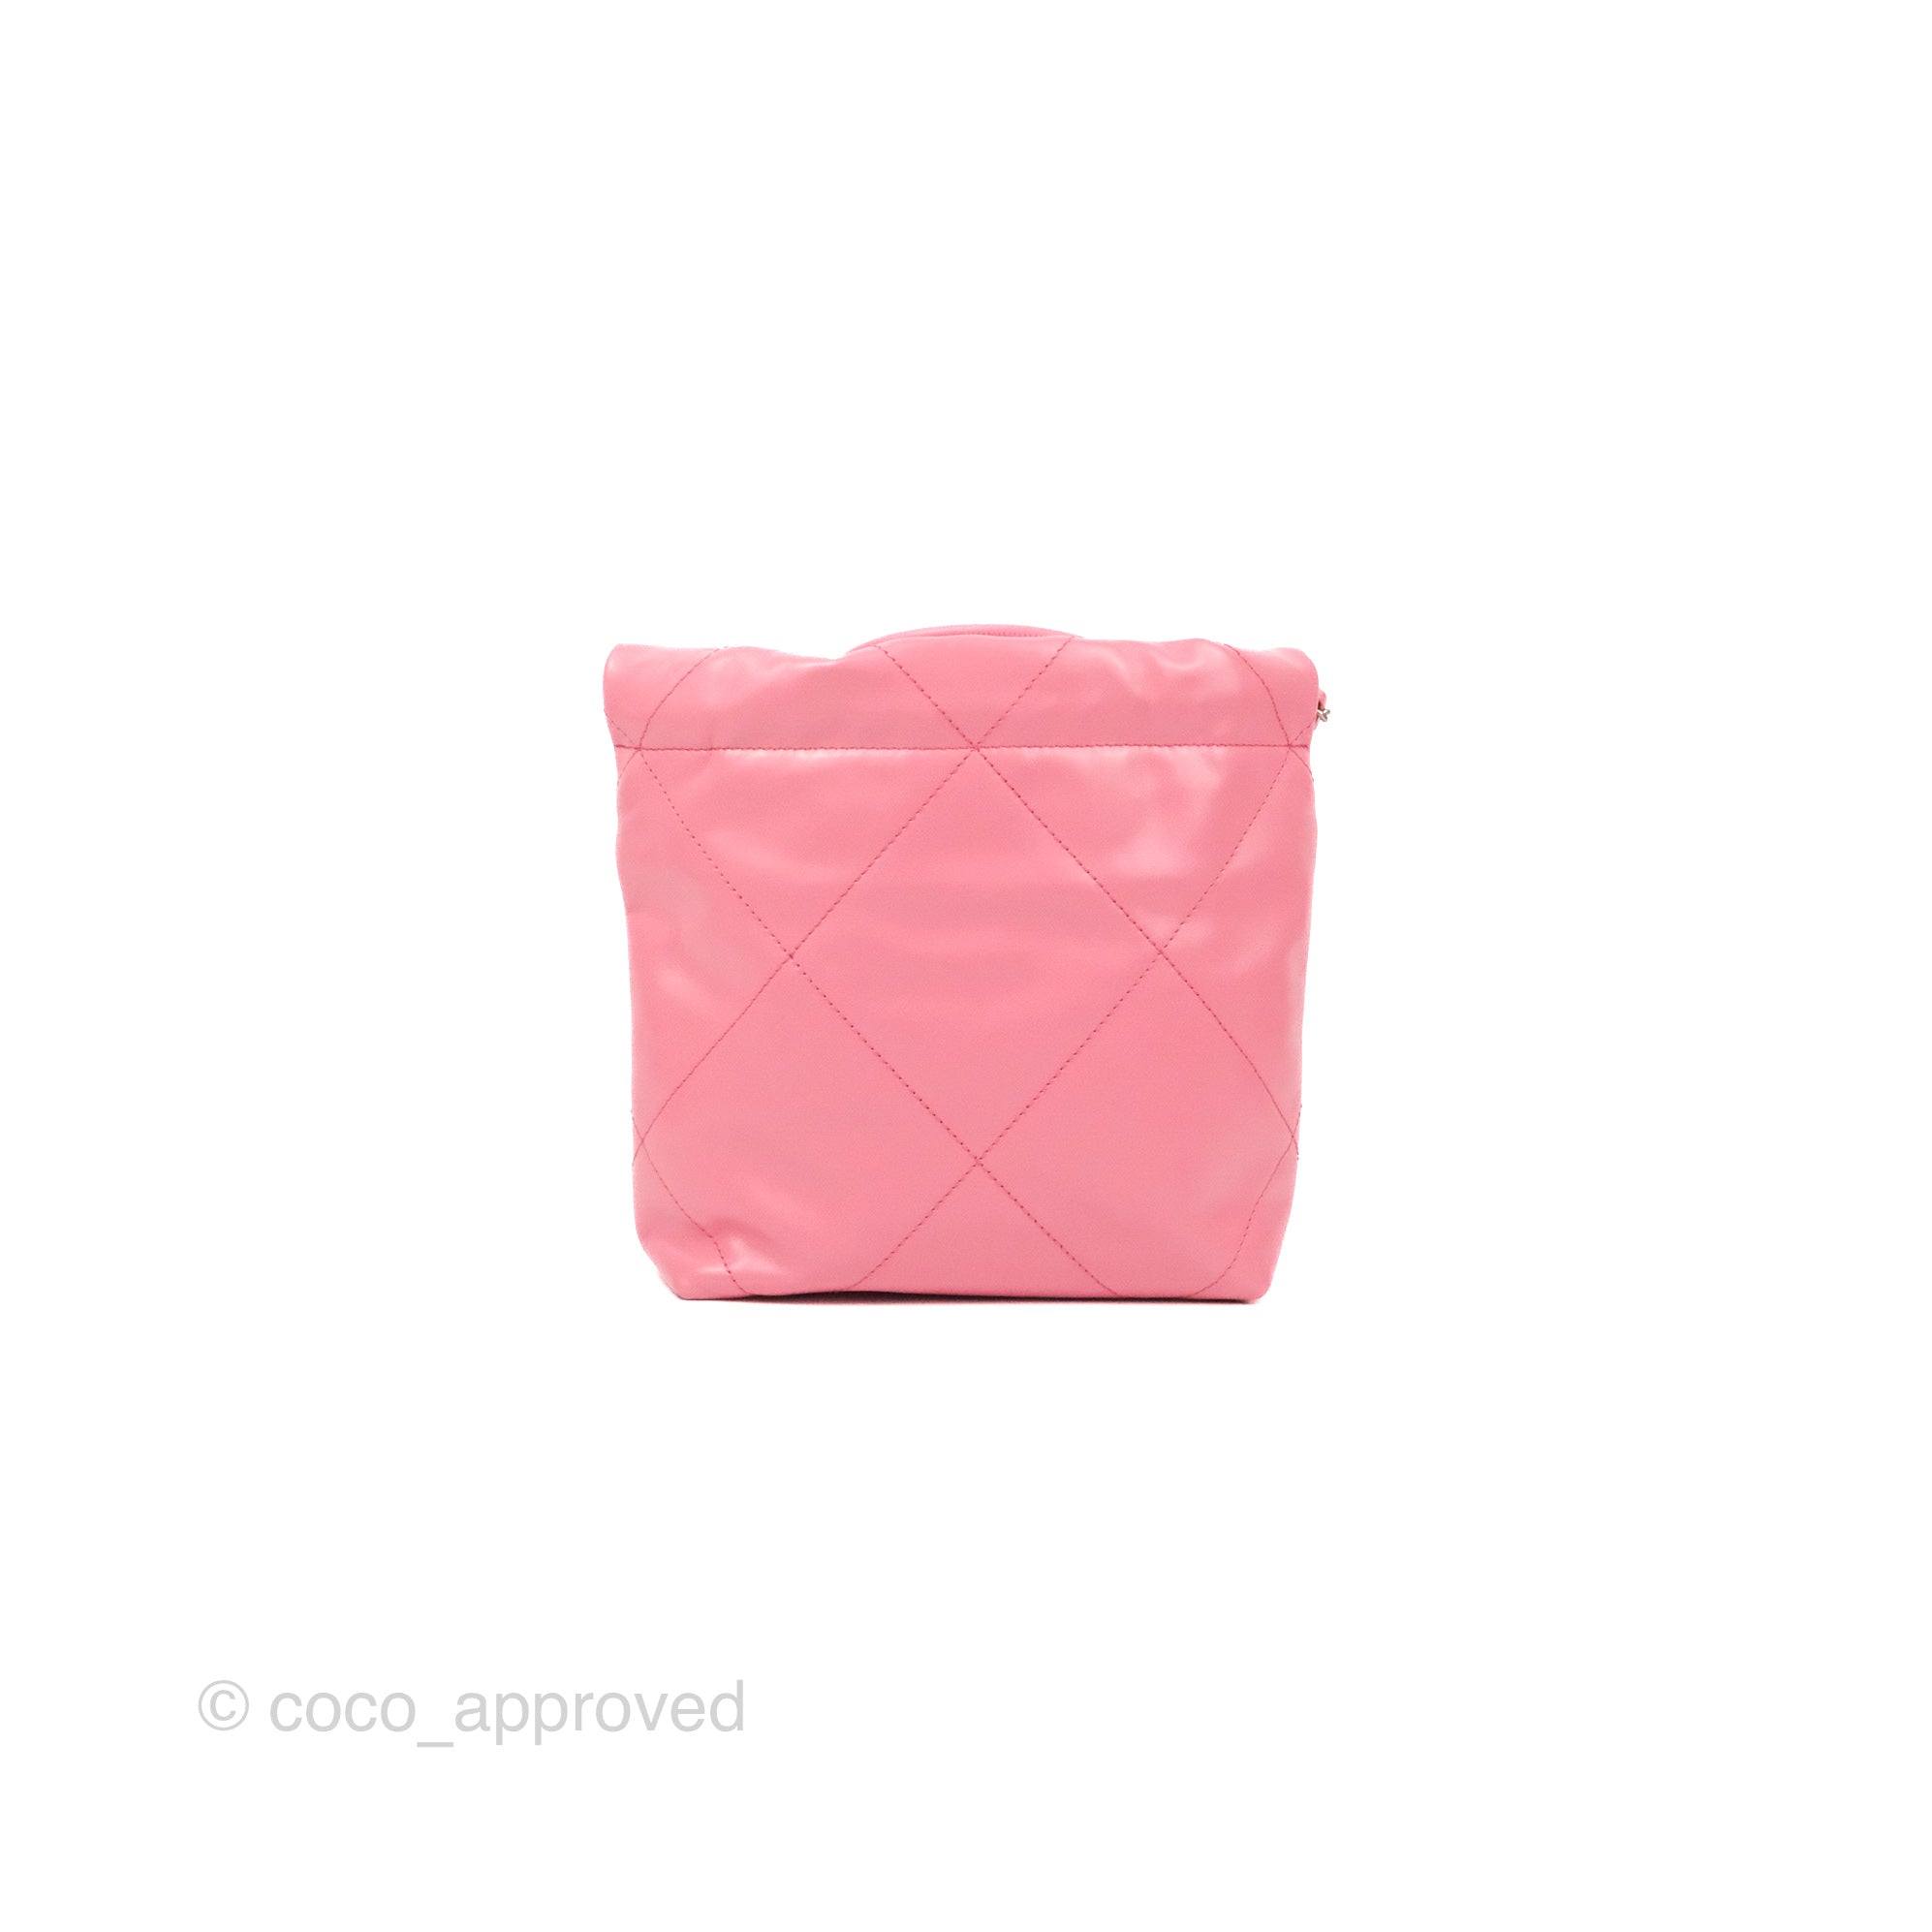 black and pink chanel bag